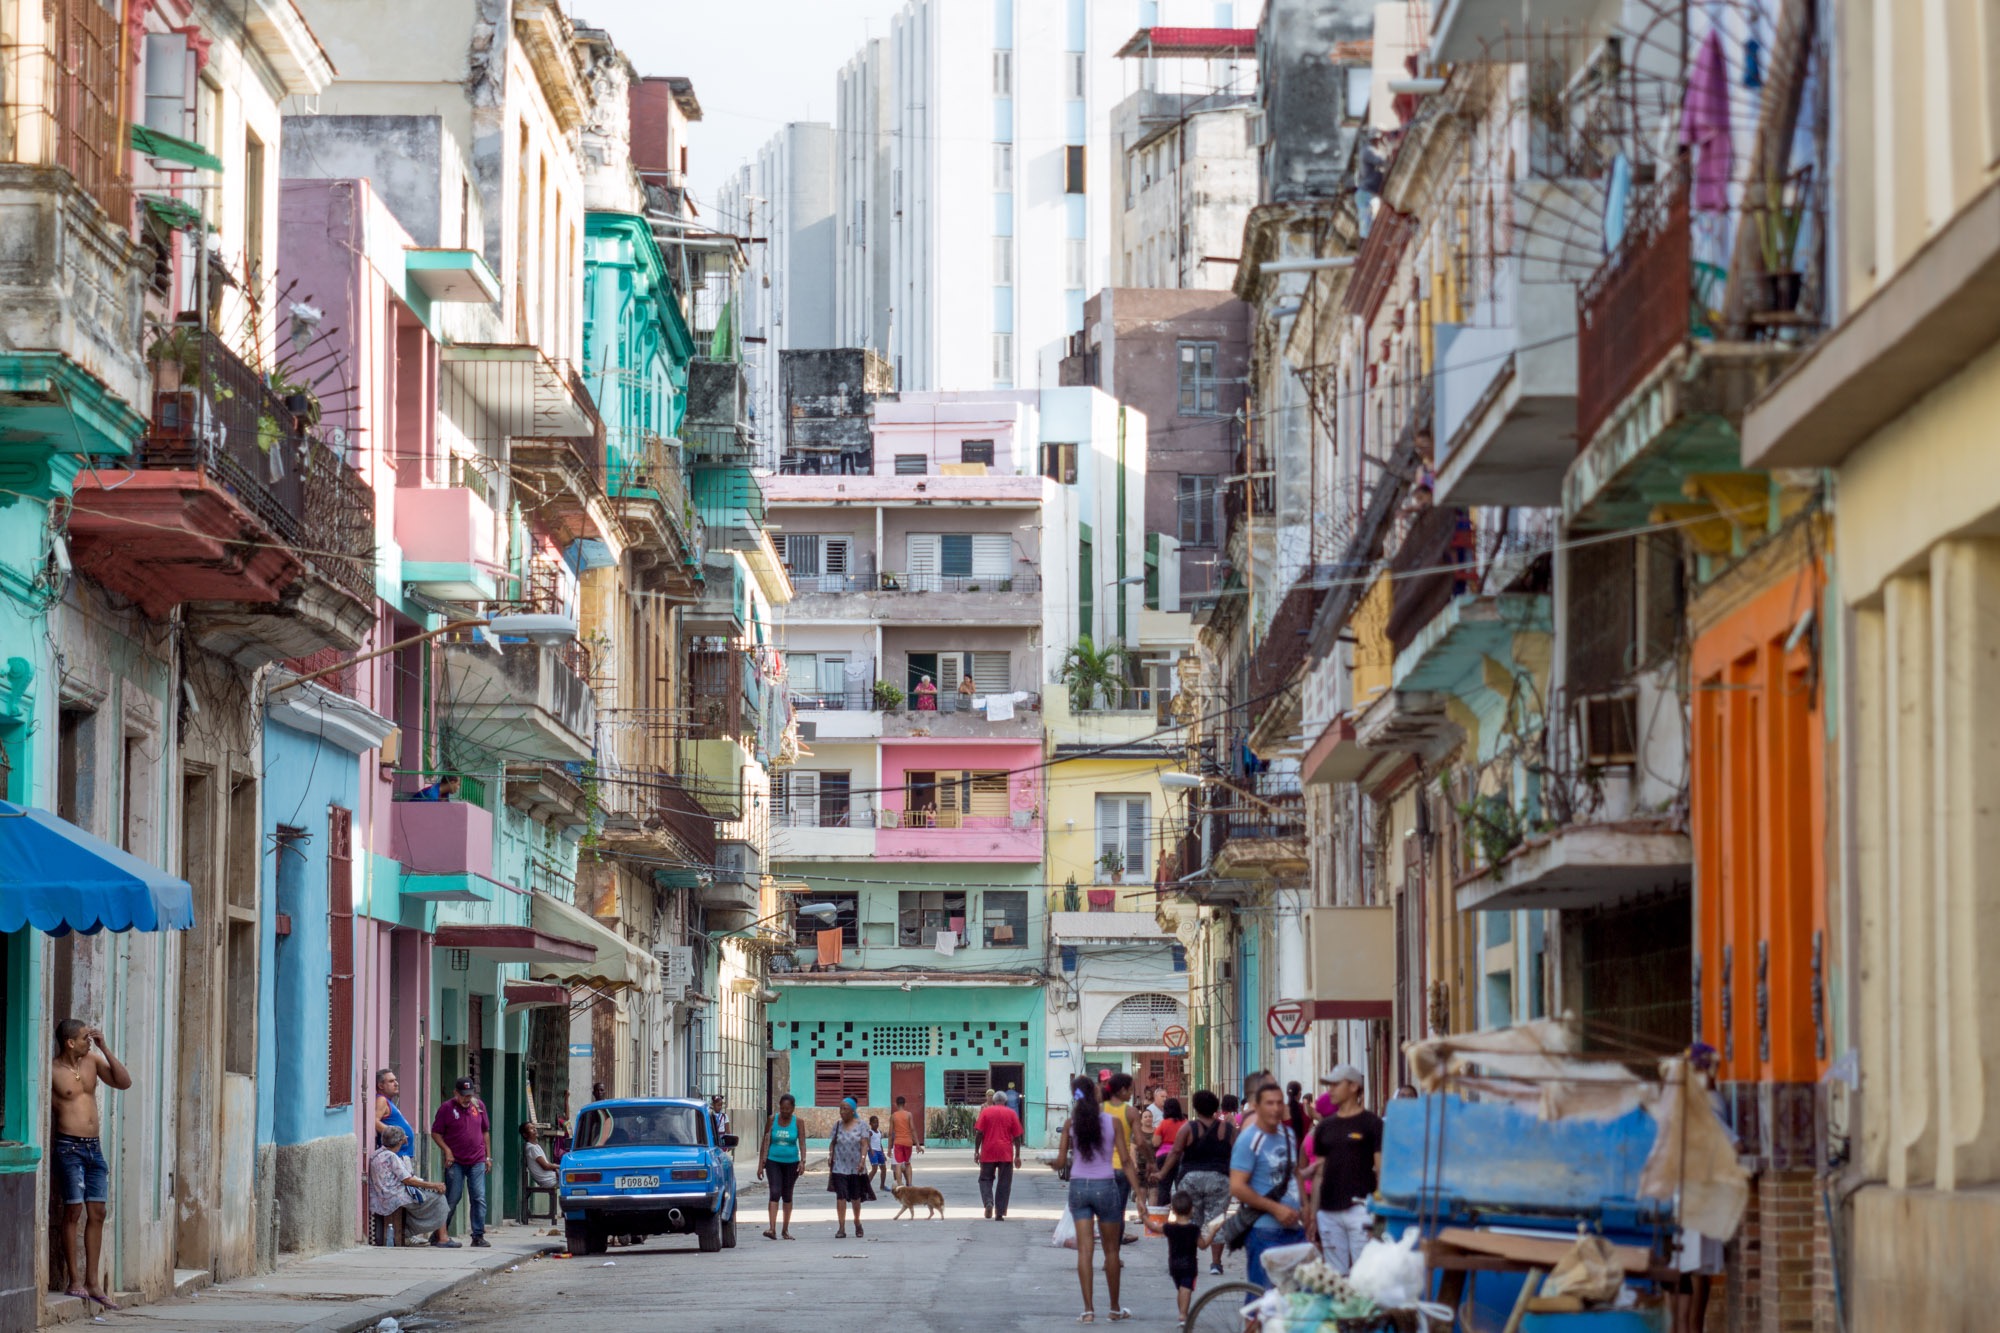 Colorful homes in Havana.